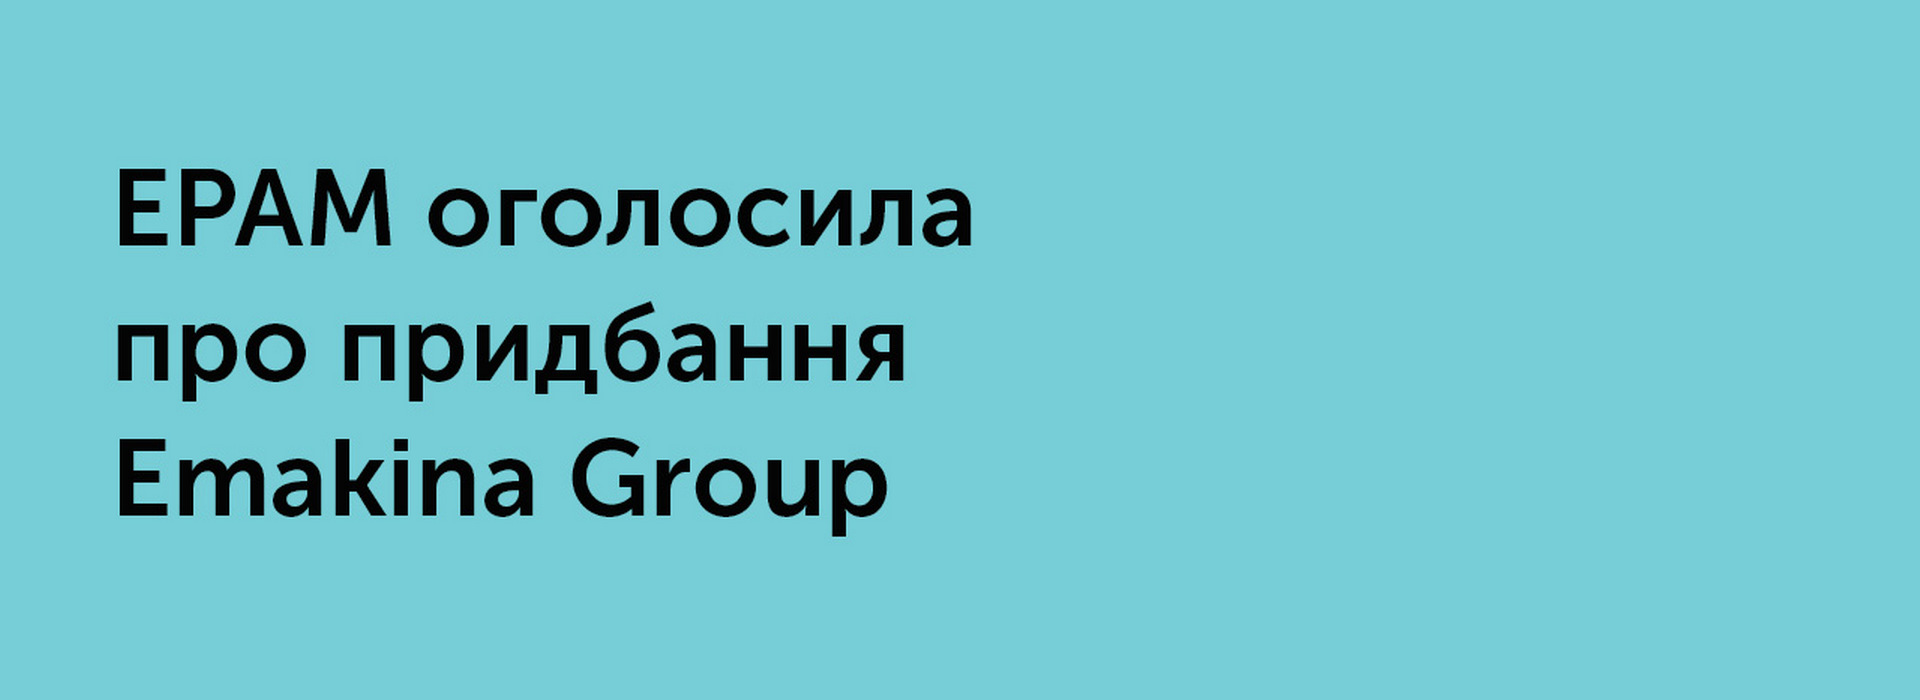 EPAM оголосила про придбання Emakina Group